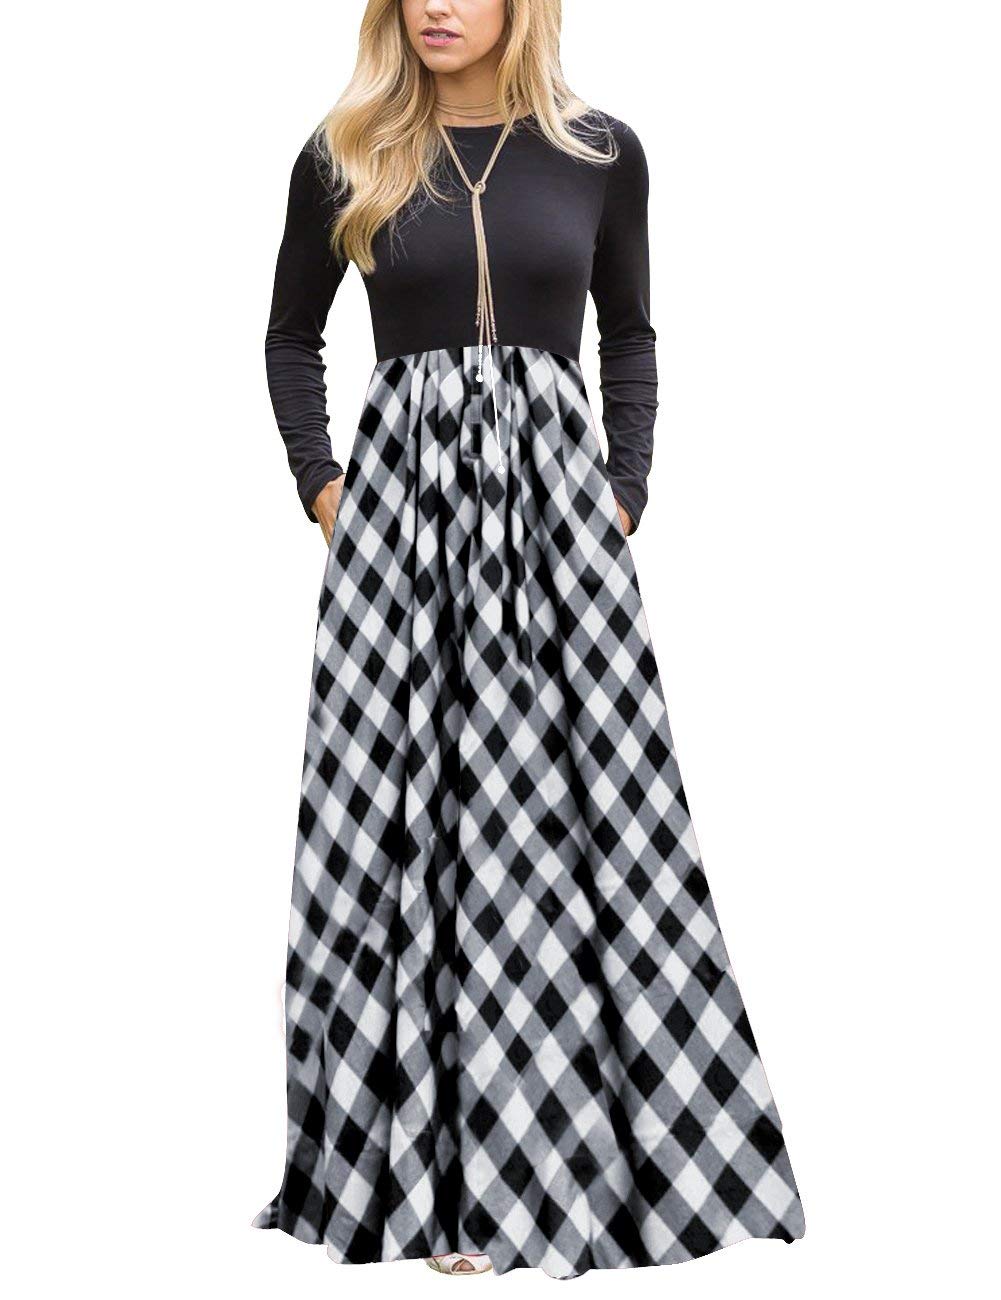 MEROKEETY Women's Long Sleeve Plaid Empire Waist Full Length Maxi Dress with Pockets